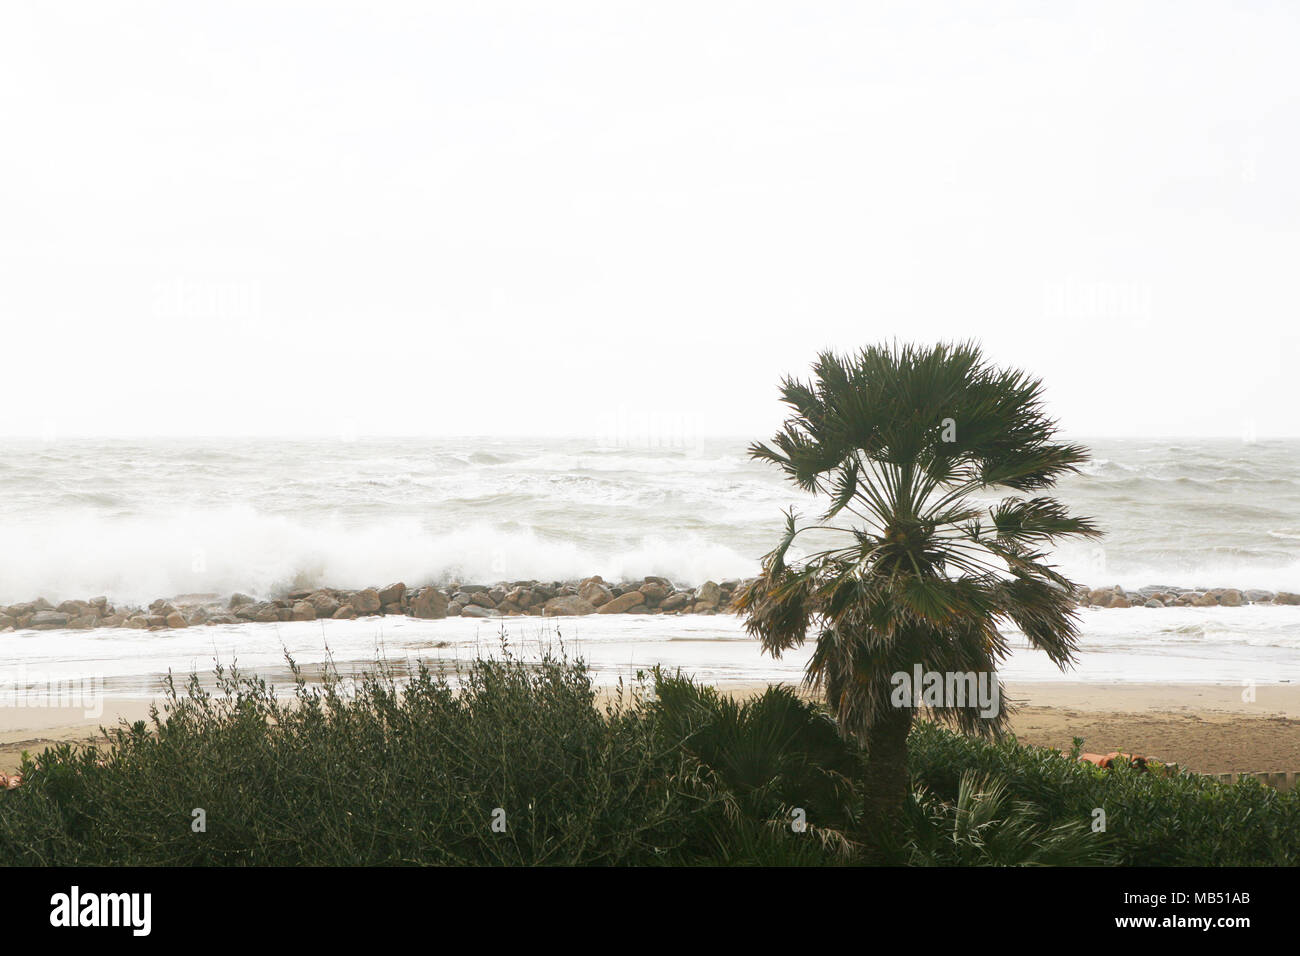 Palme bei einem Seesturm, Santa Severa, Italien Stockfoto